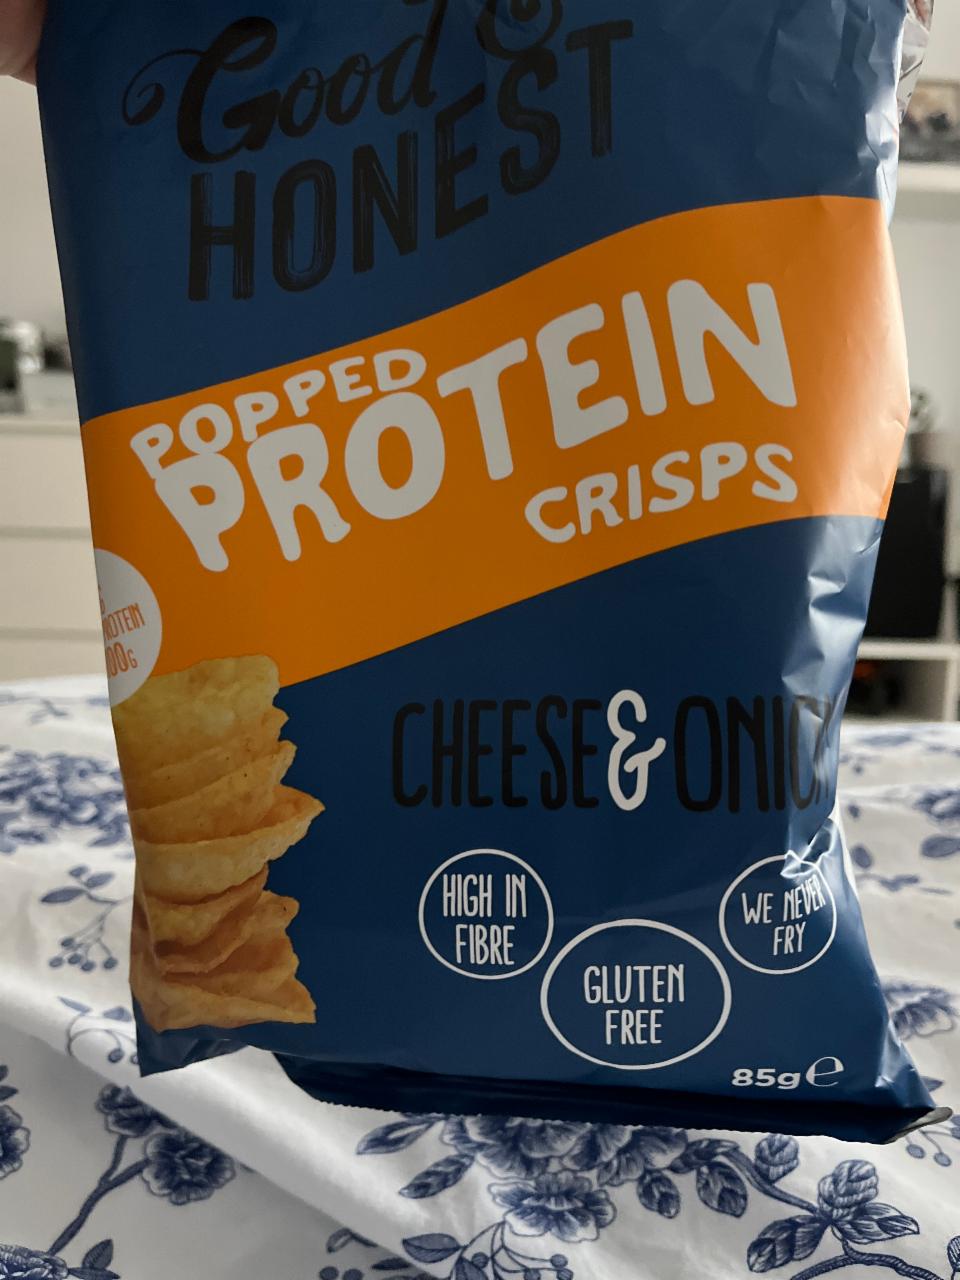 Zdjęcia - Popped protein crisps cheese onion Good & Honest